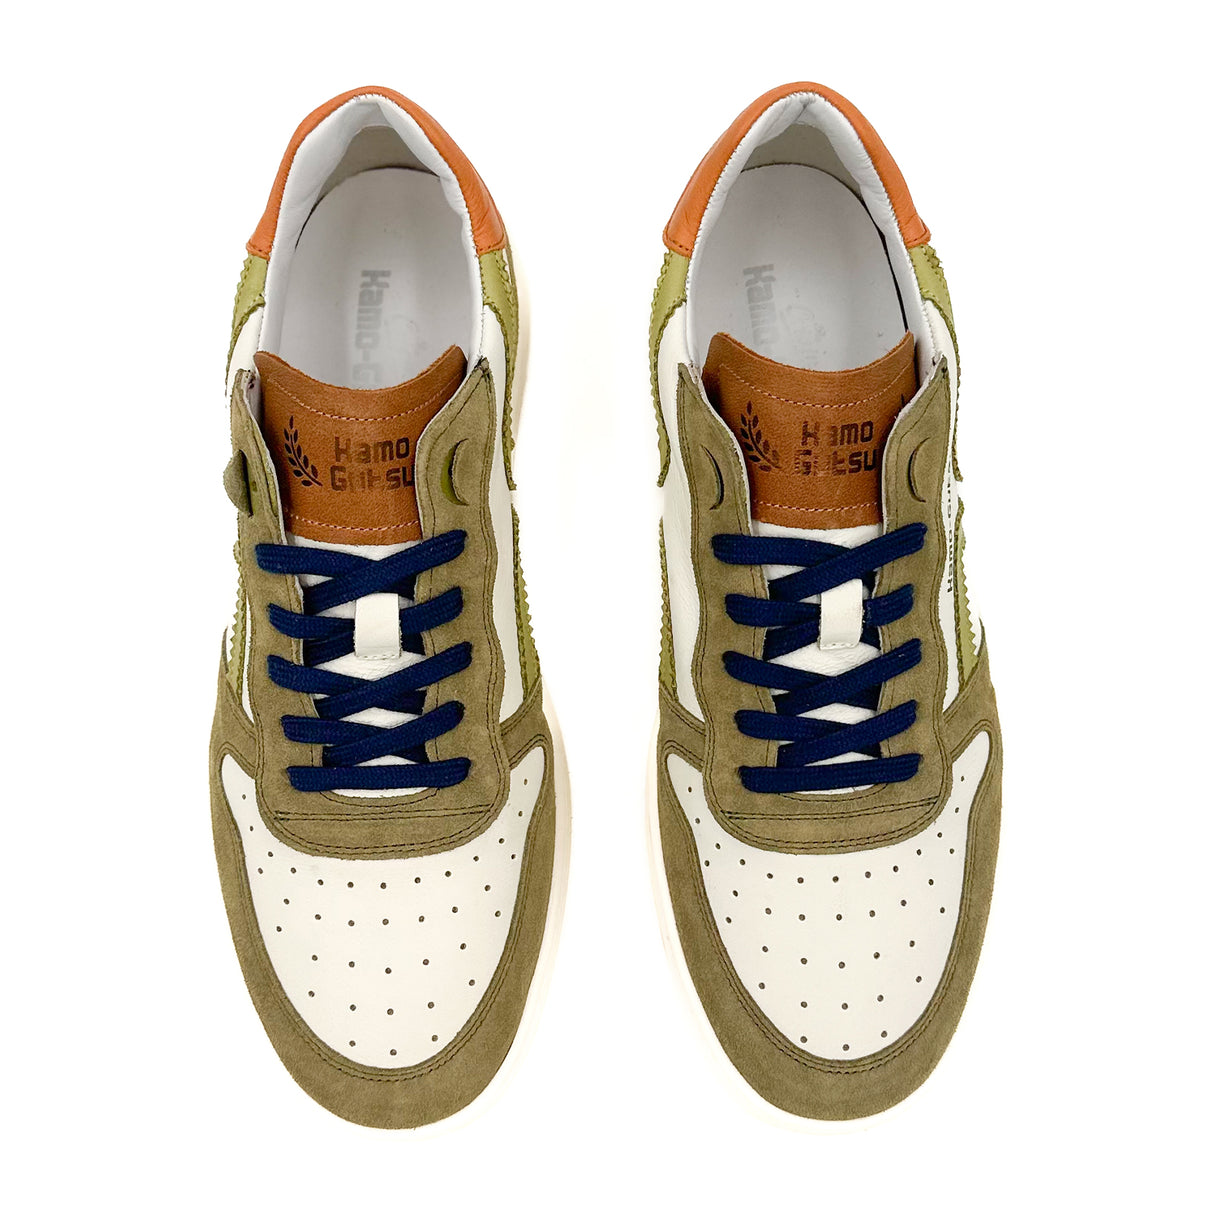 Kamo-Gutsu CAMPO 048 Sneaker (Men) - Khaki/White/Asparagus Dress-Casual - Sneakers - The Heel Shoe Fitters